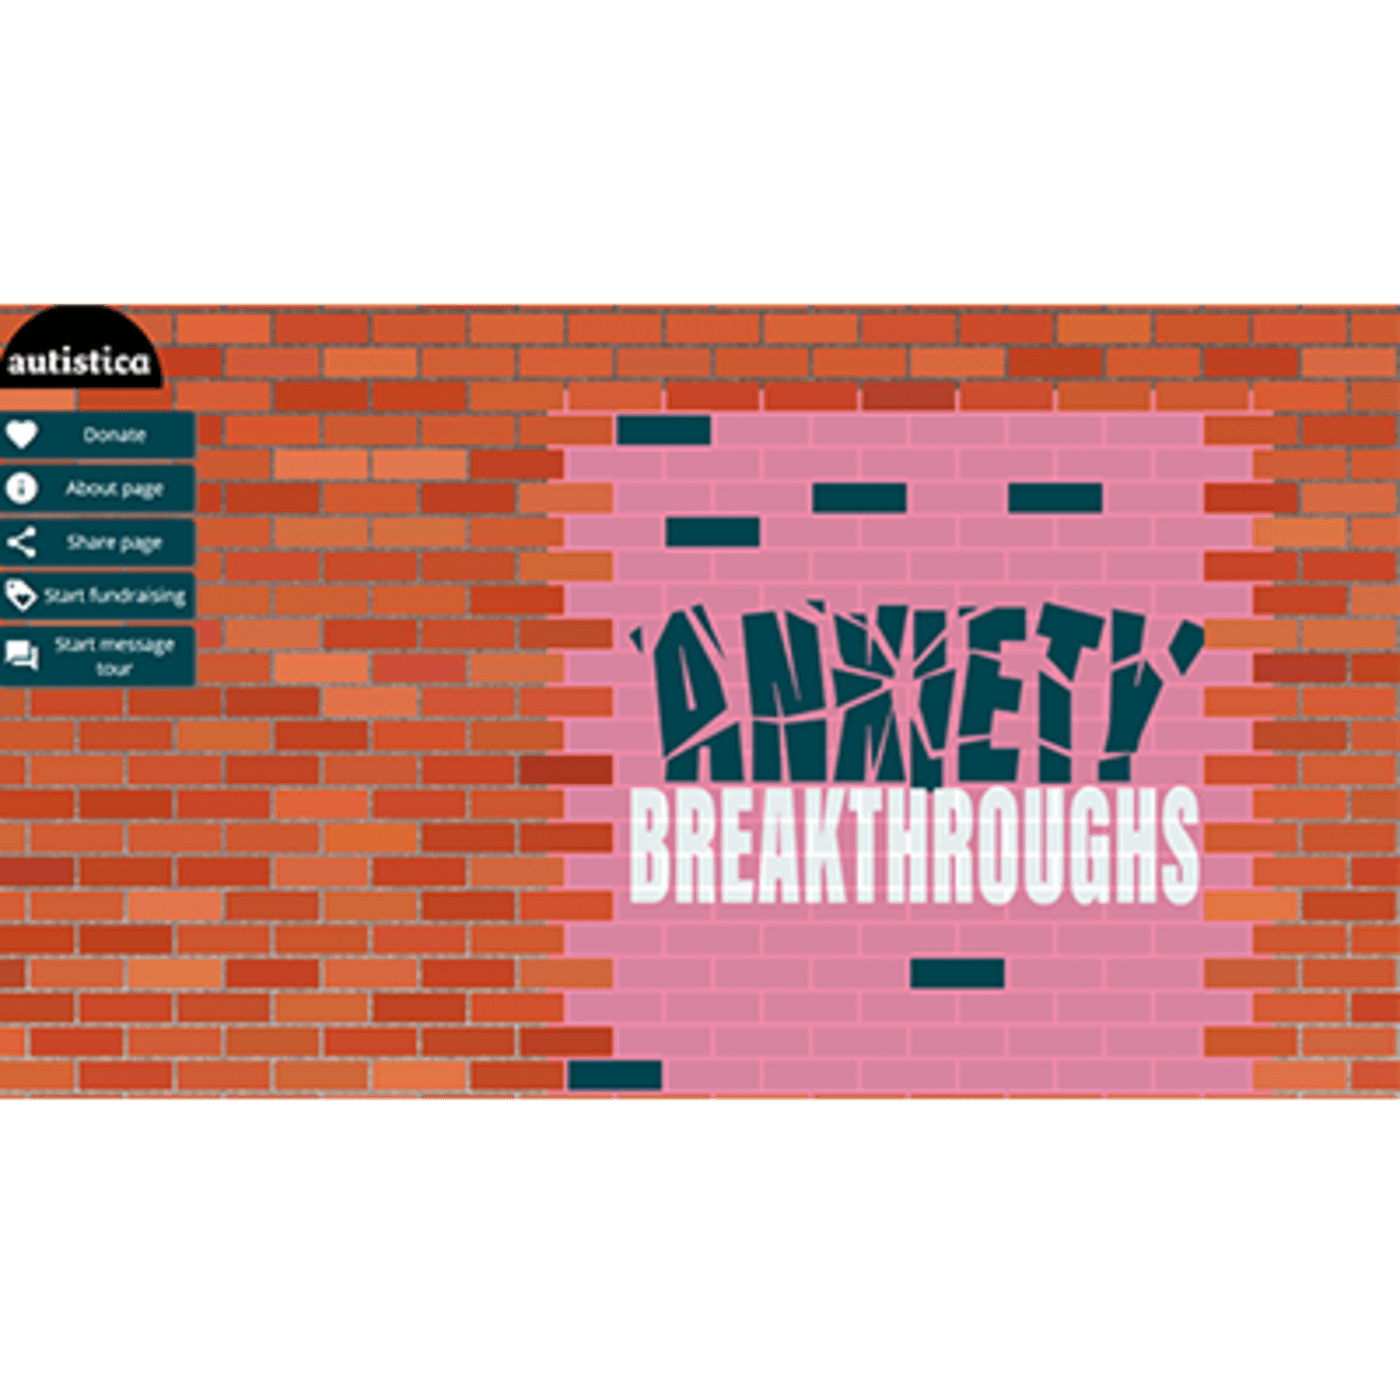 Autistica (2021). Anxiety Breakthrough